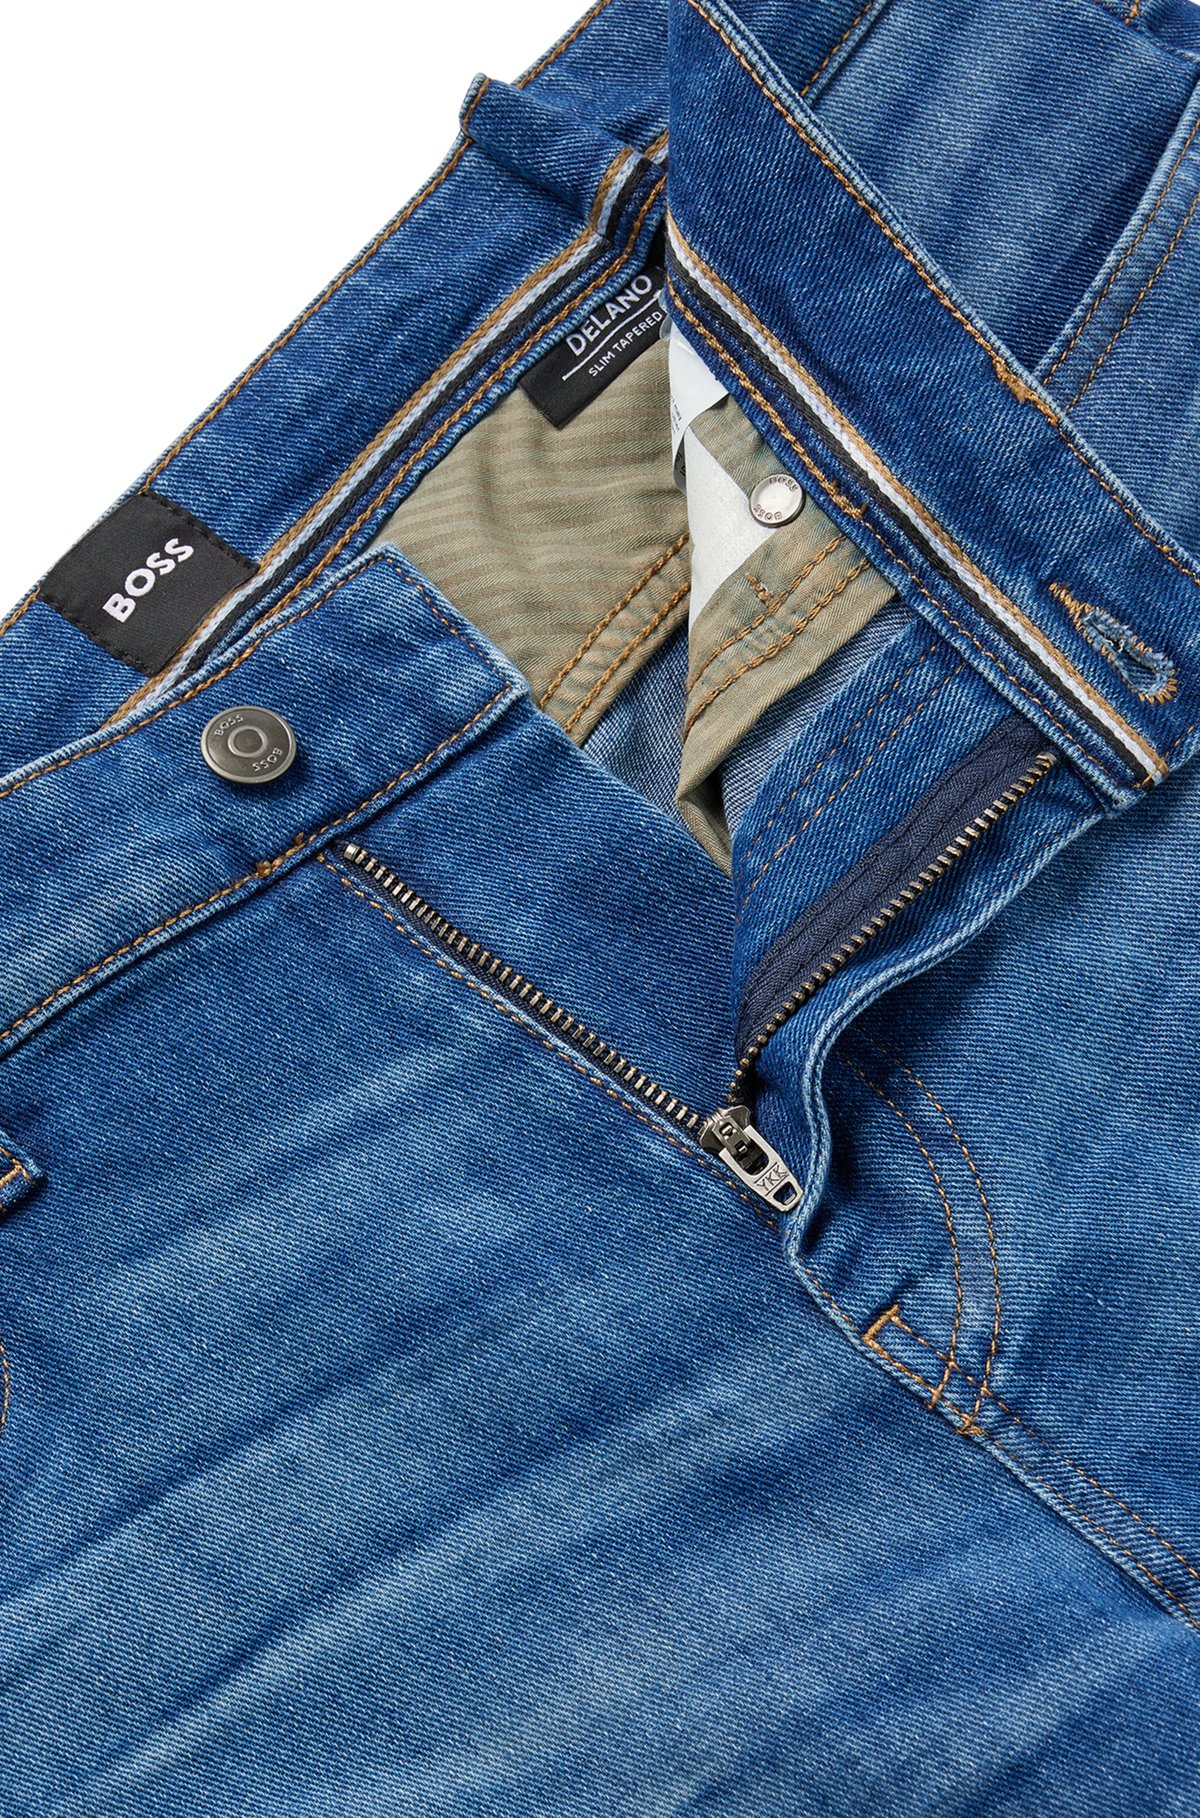 Interprete metodología voluntario BOSS - Slim-fit jeans in blue Italian denim with organic cotton